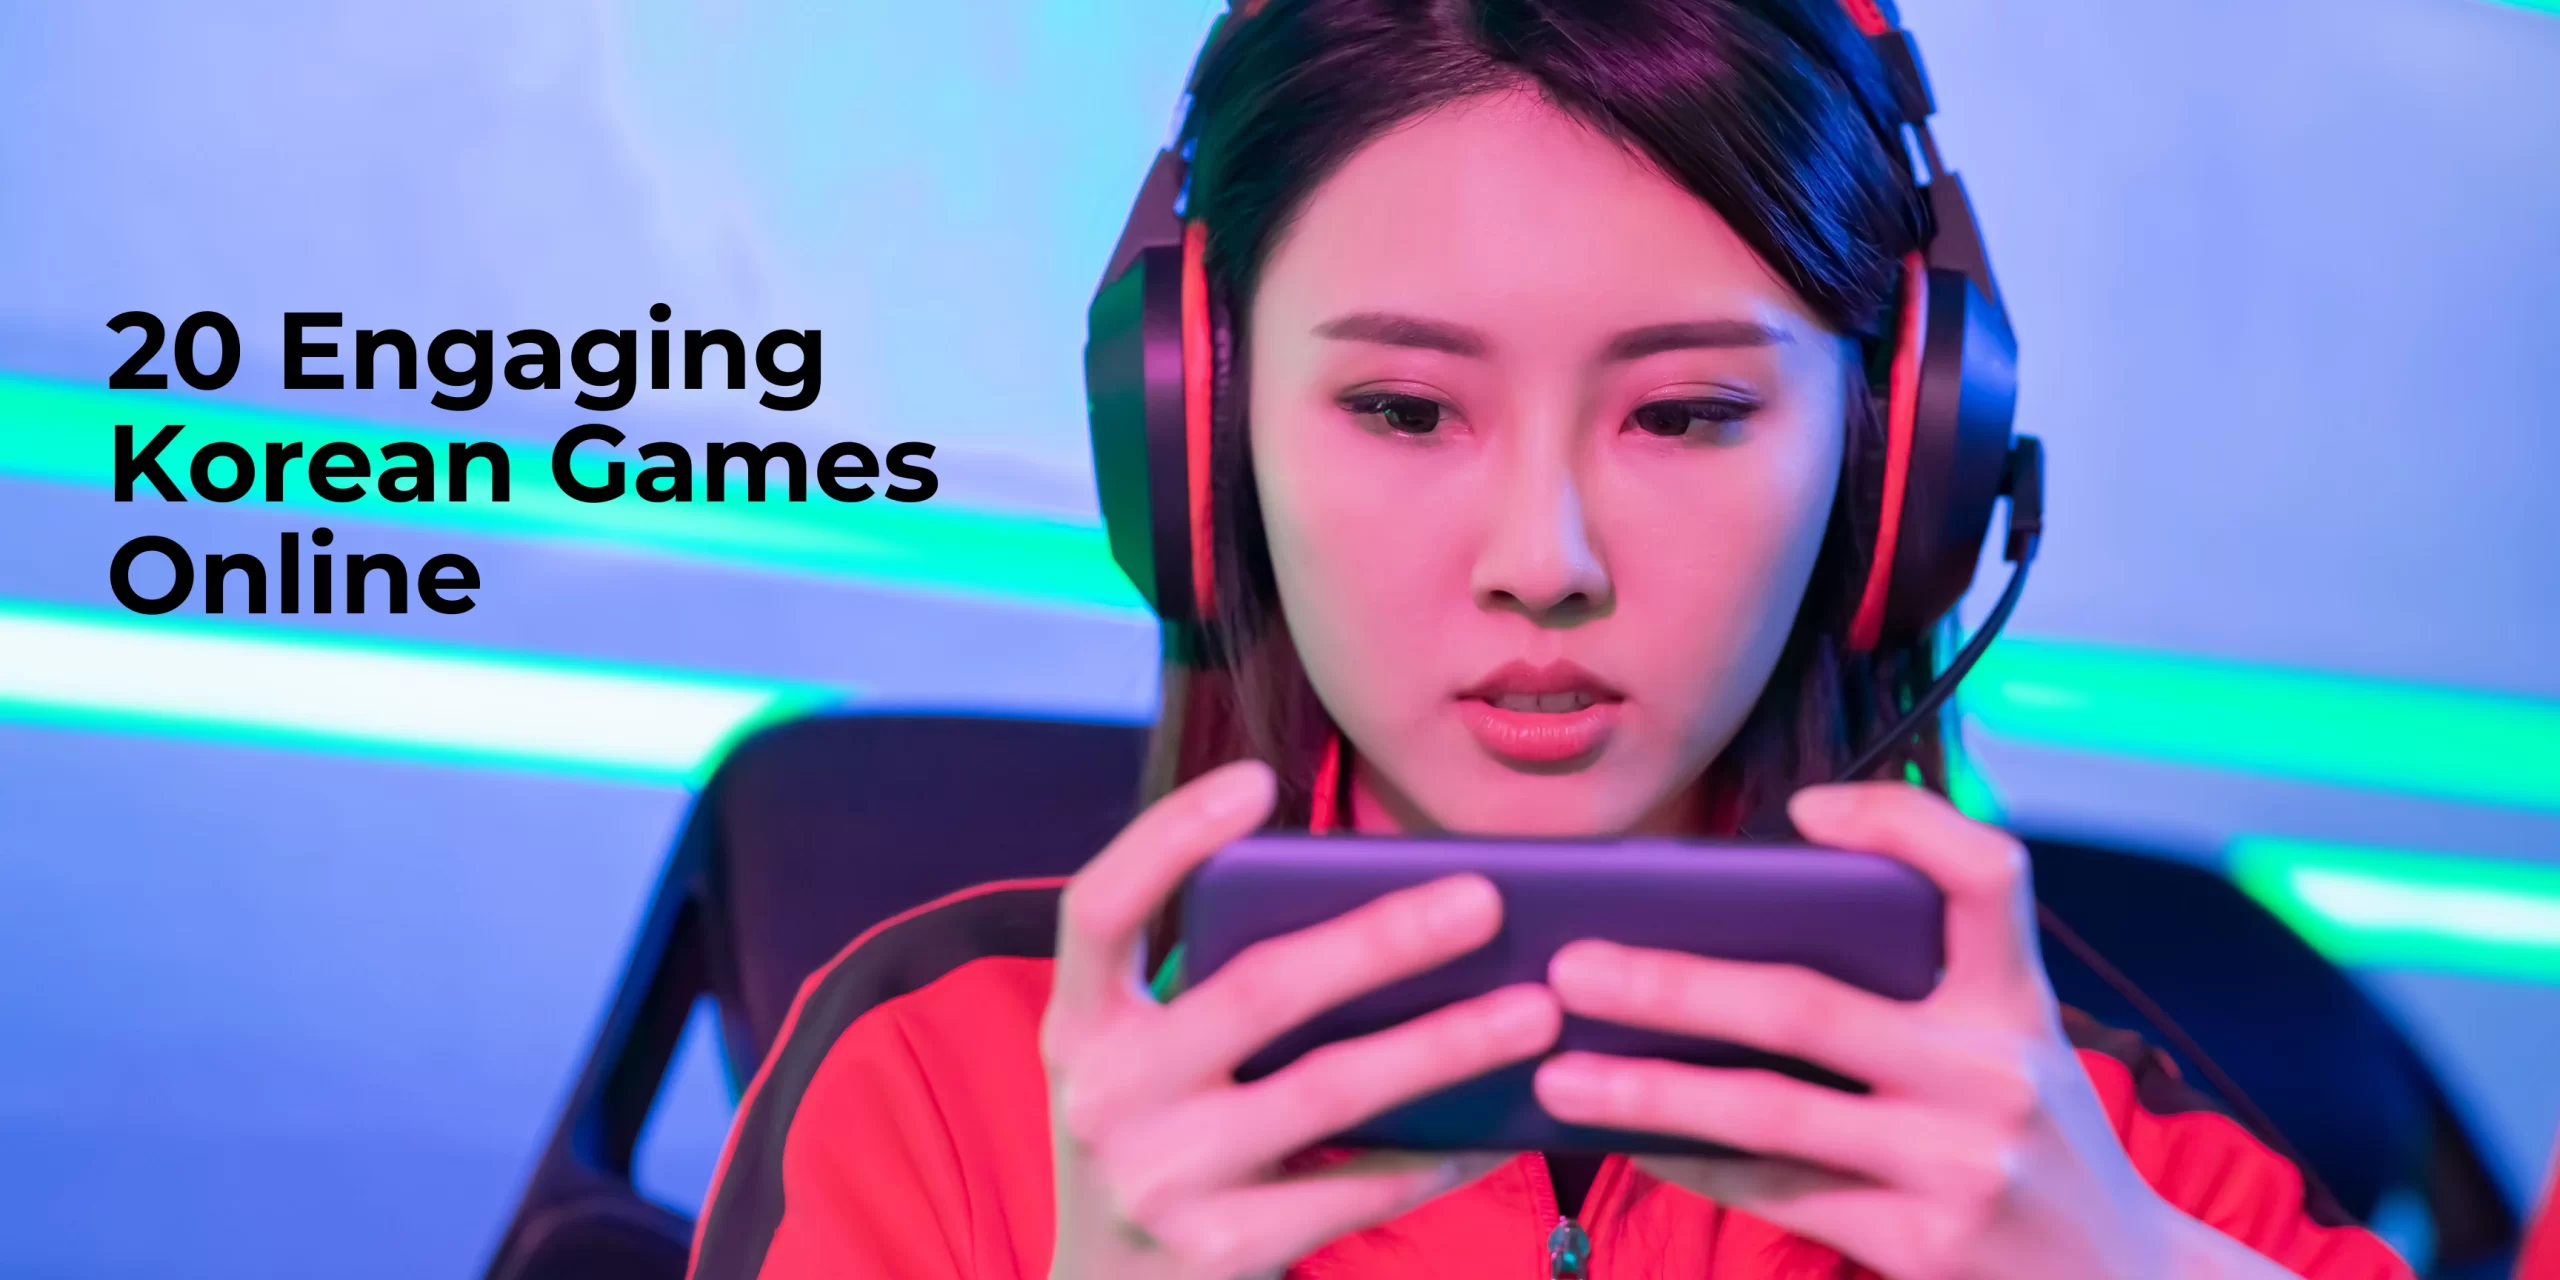 20 Engaging Korean Games Online: Learn Korean Language and Have Fun